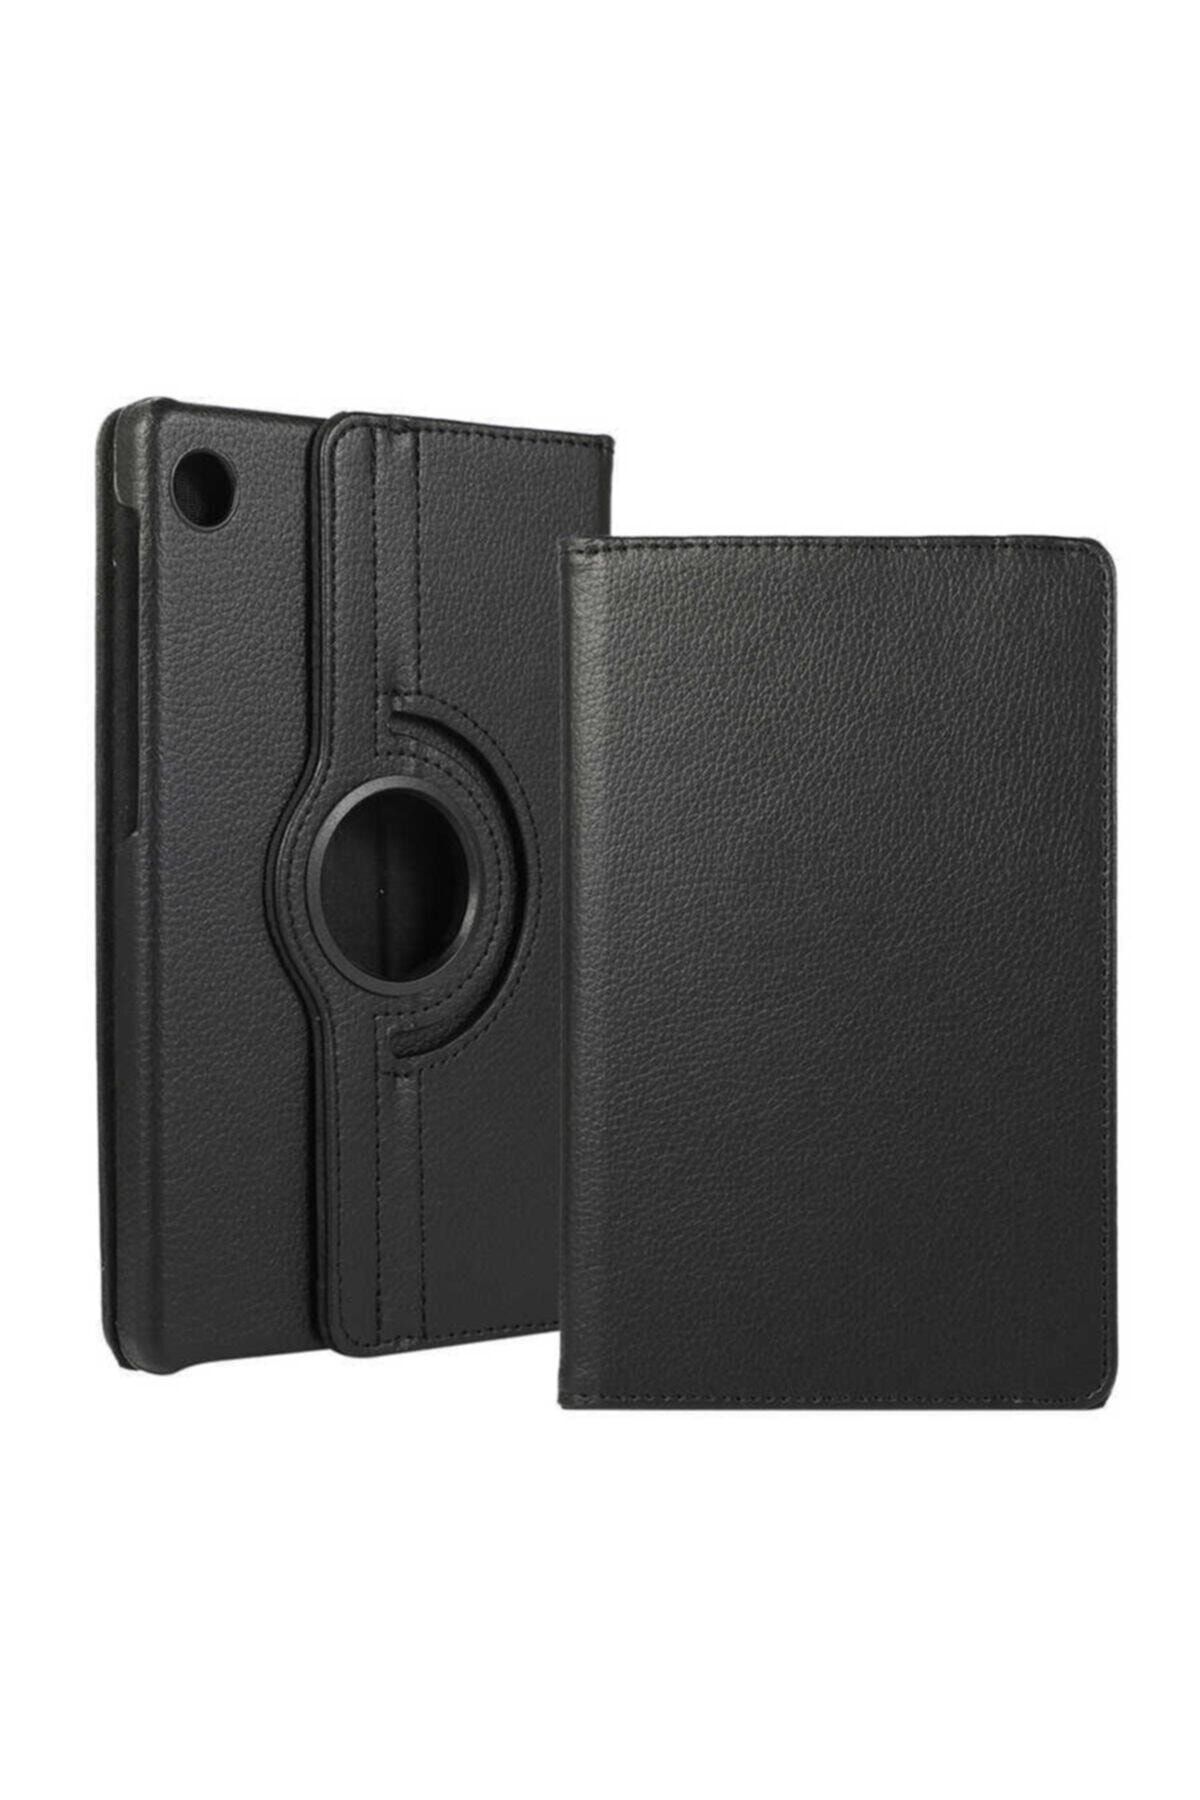 TEKNETSTORE Huawei Matepad T10 / T10s Kılıf 360°dönebilen Deri Leather New Style Cover Case(SİYAH)